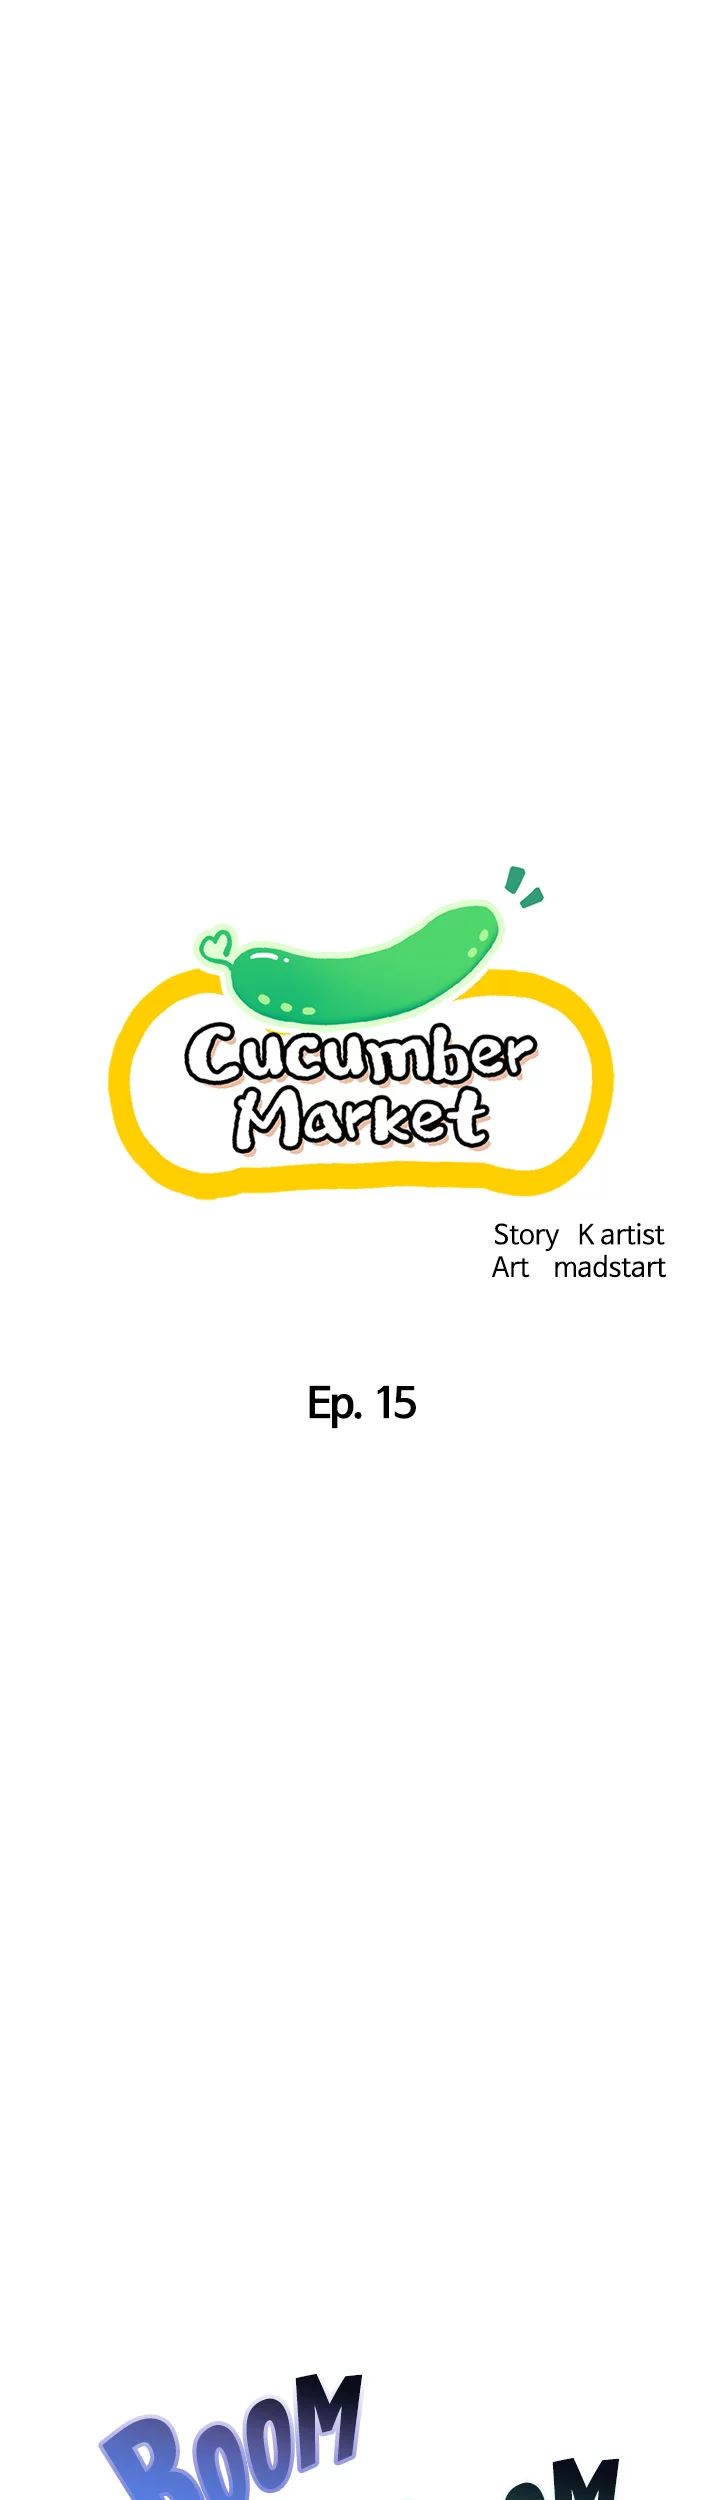 Cucumber Market image